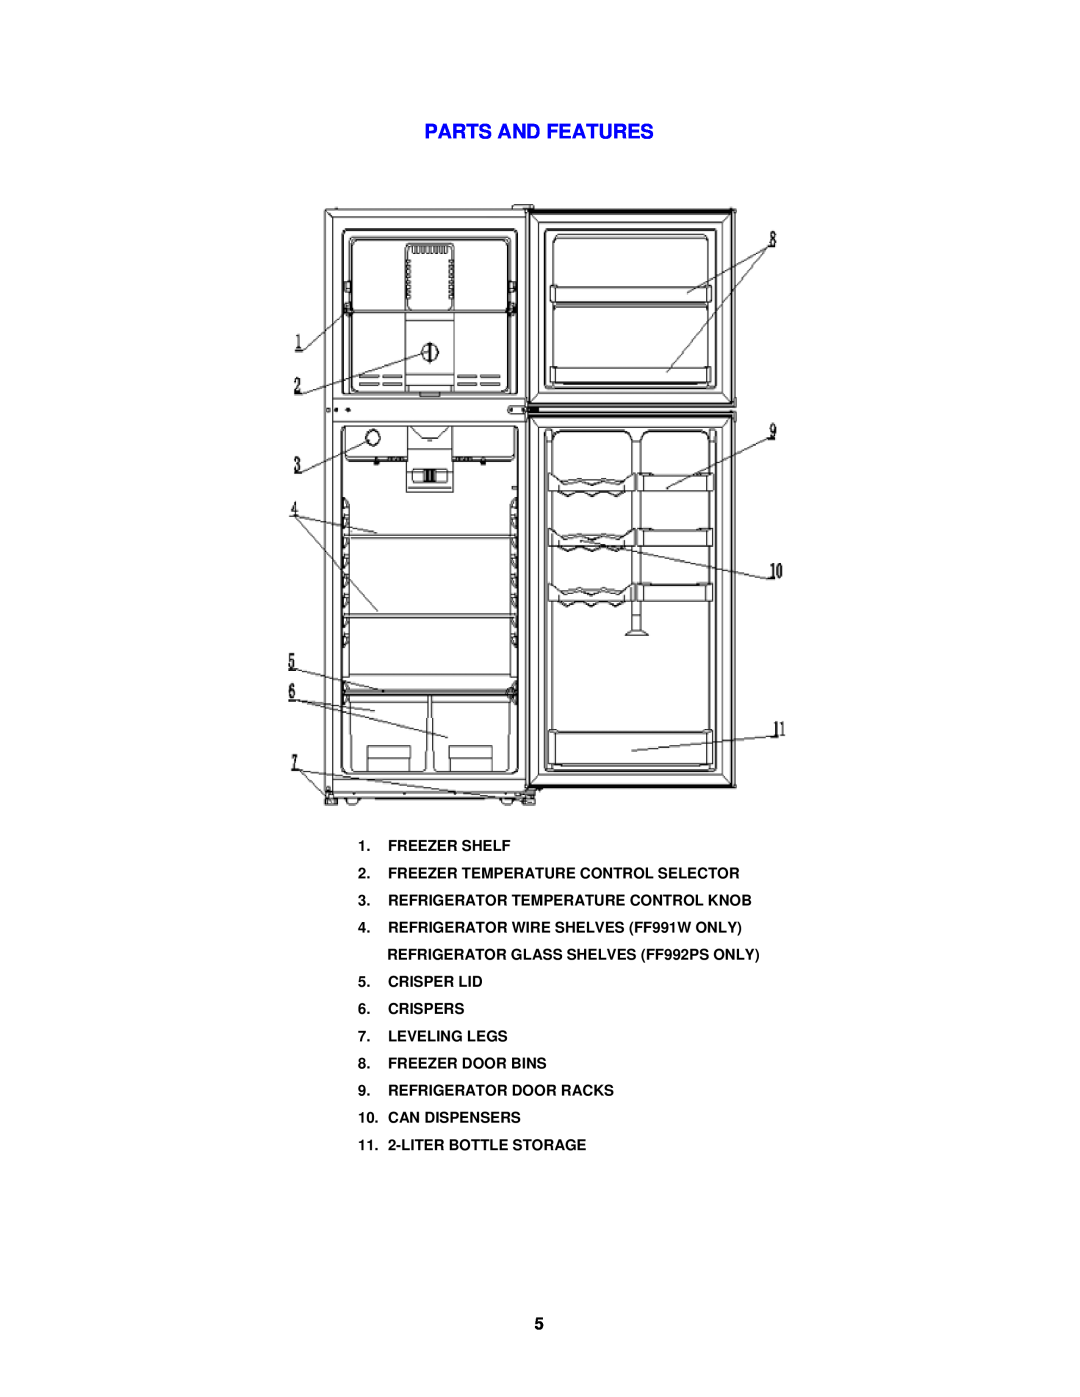 Avanti FF992PS instruction manual Parts And Features, Freezer Shelf, Freezer Temperature Control Selector 